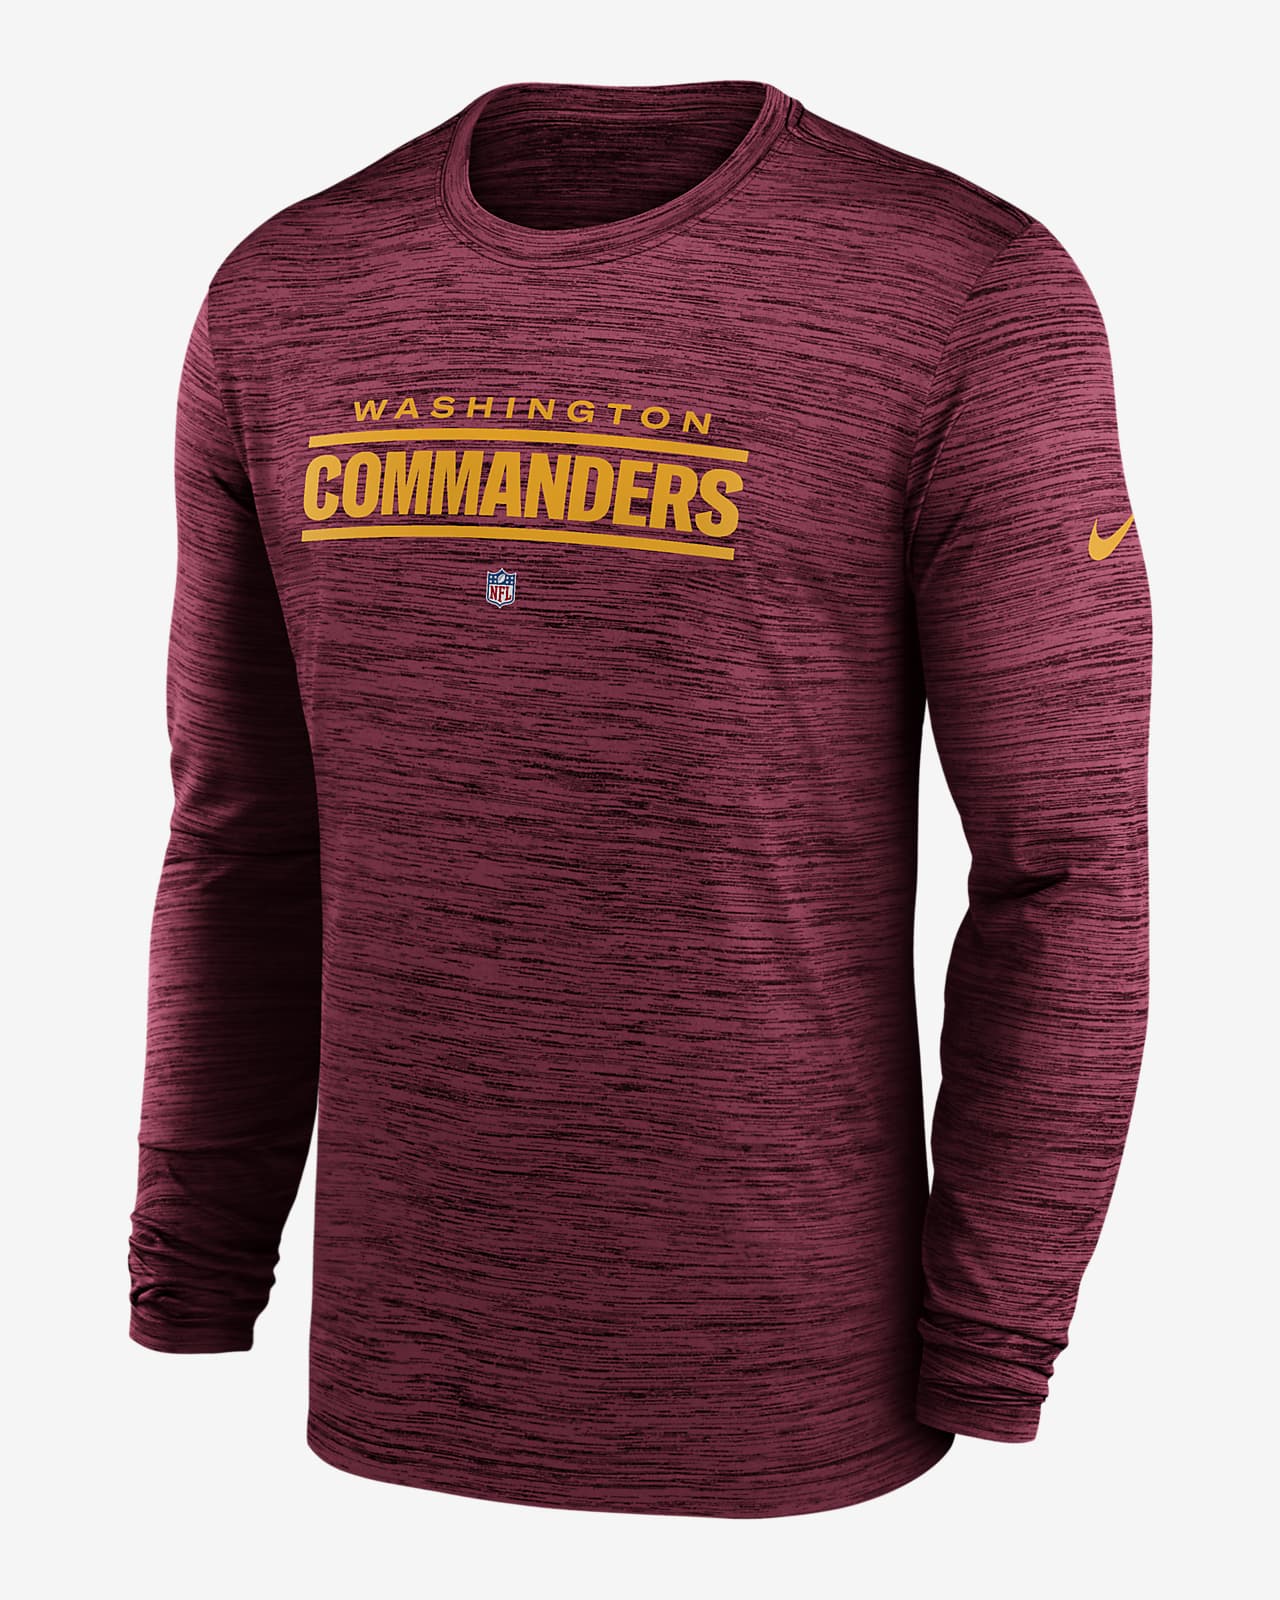 washington commanders shirts for sale